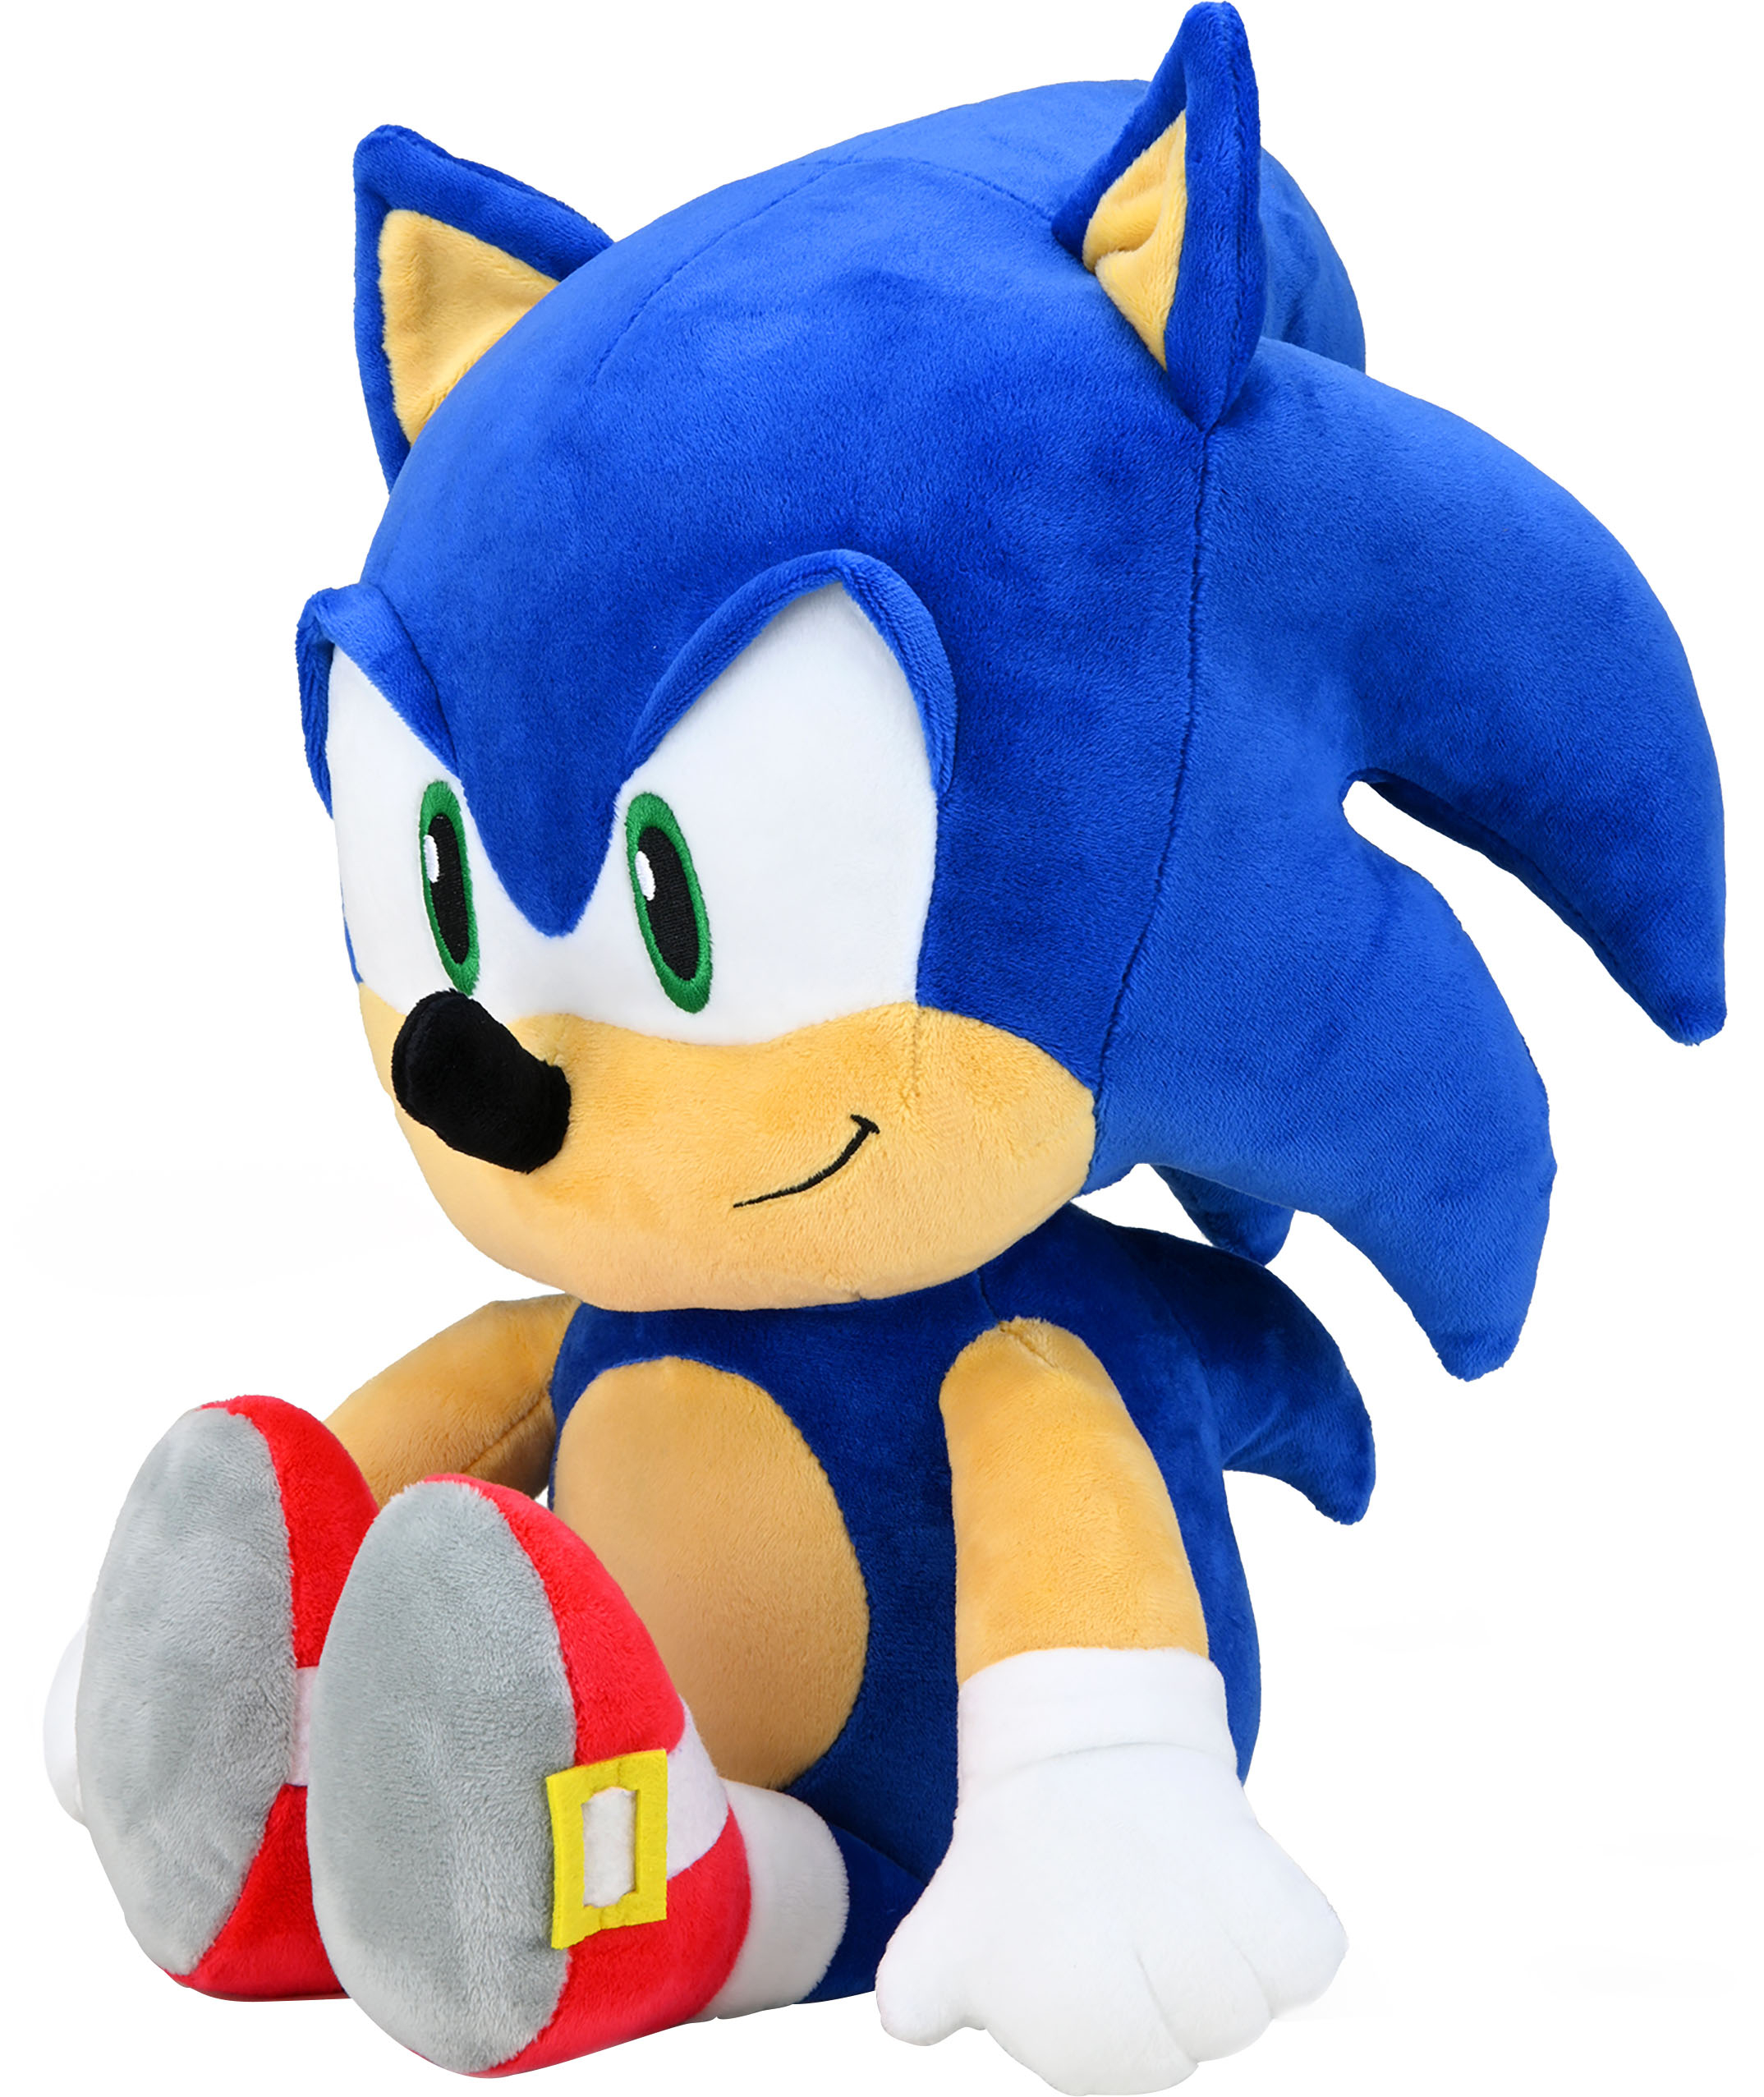 Buy Sonic The Hedgehog